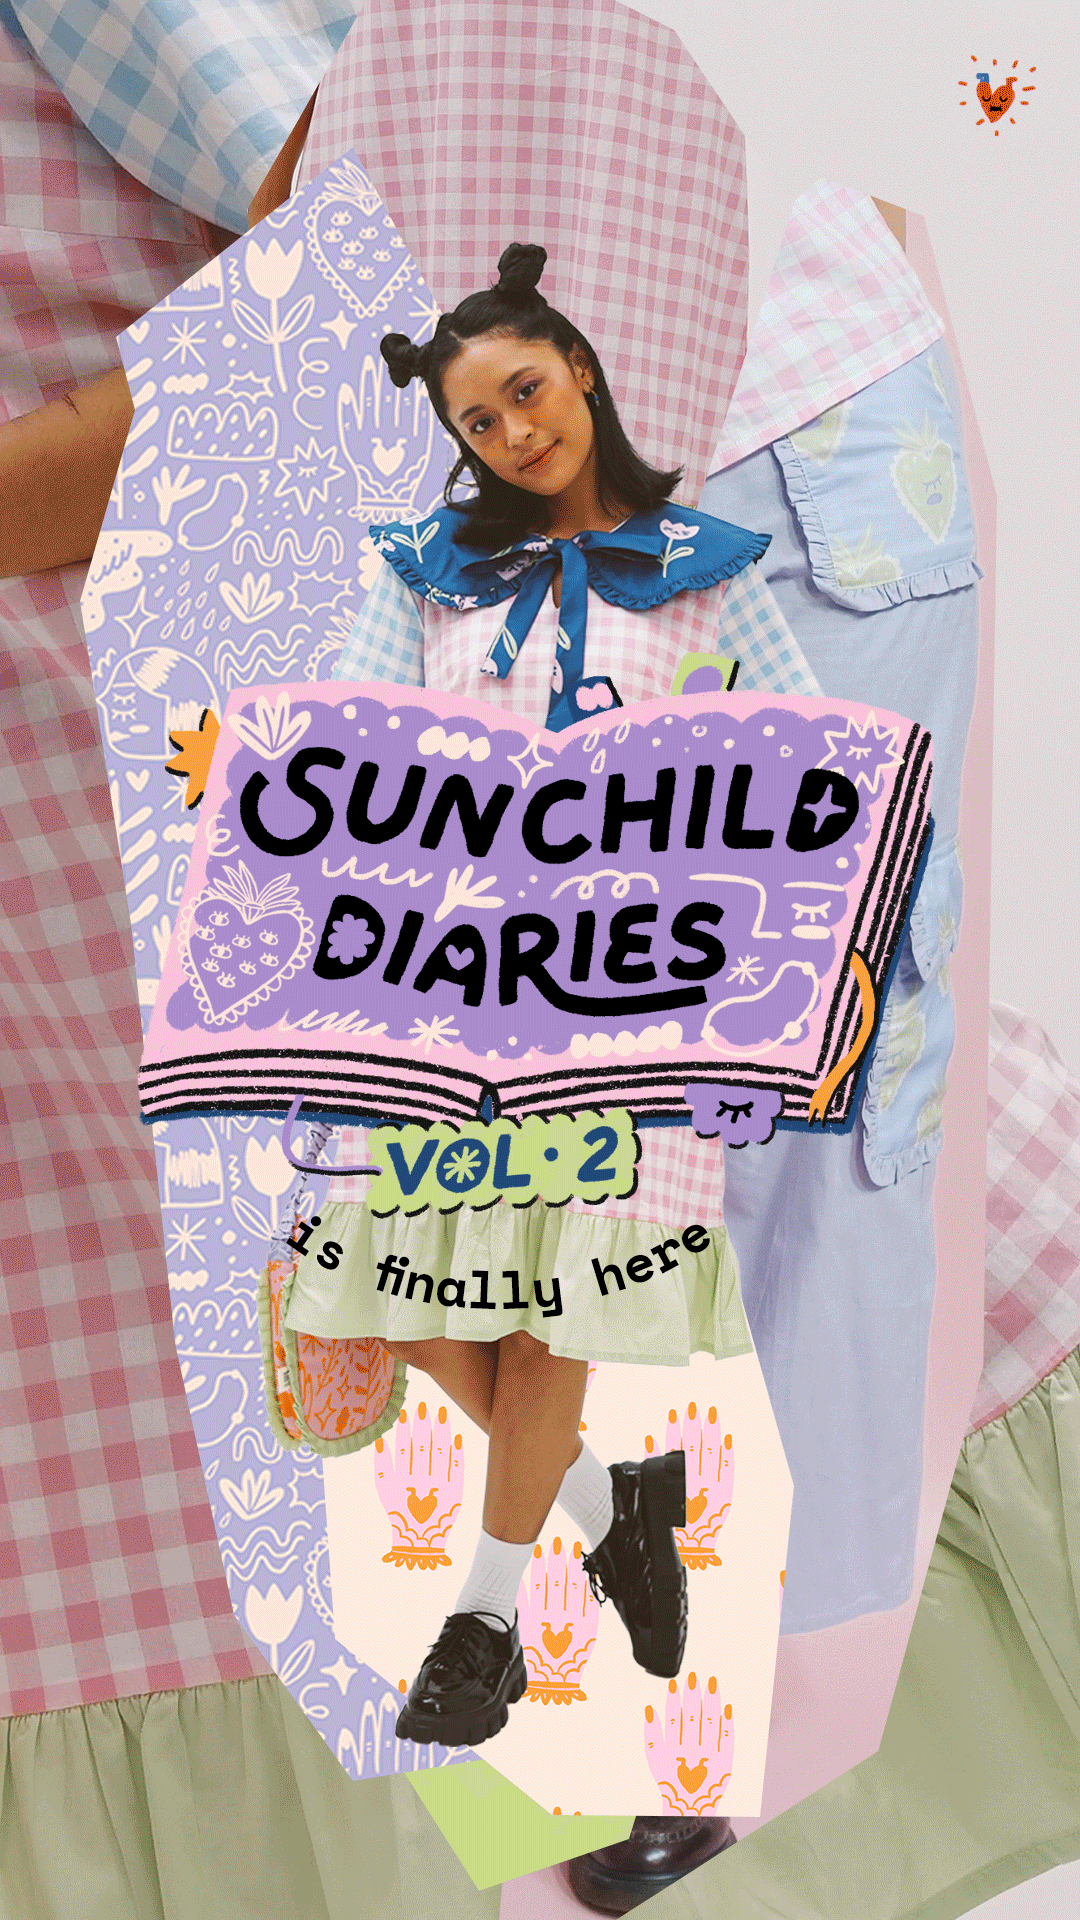 Sunnier Days are Here🌞 Meet Sunchild Diaries Vol.2!